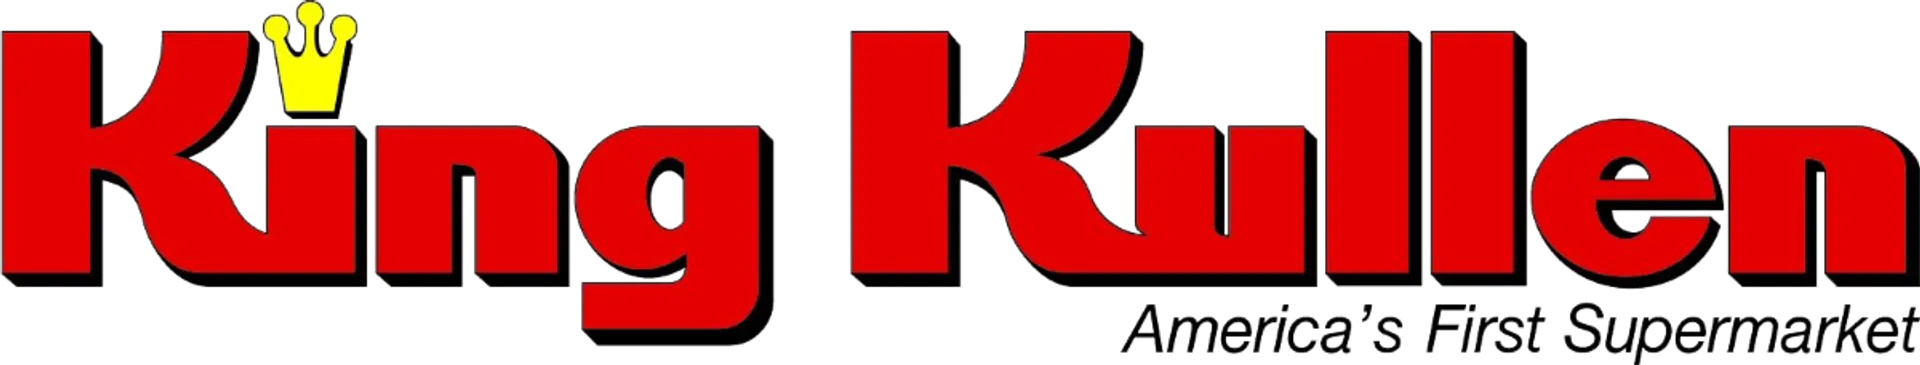 KING KULLEN logo current weekly ad